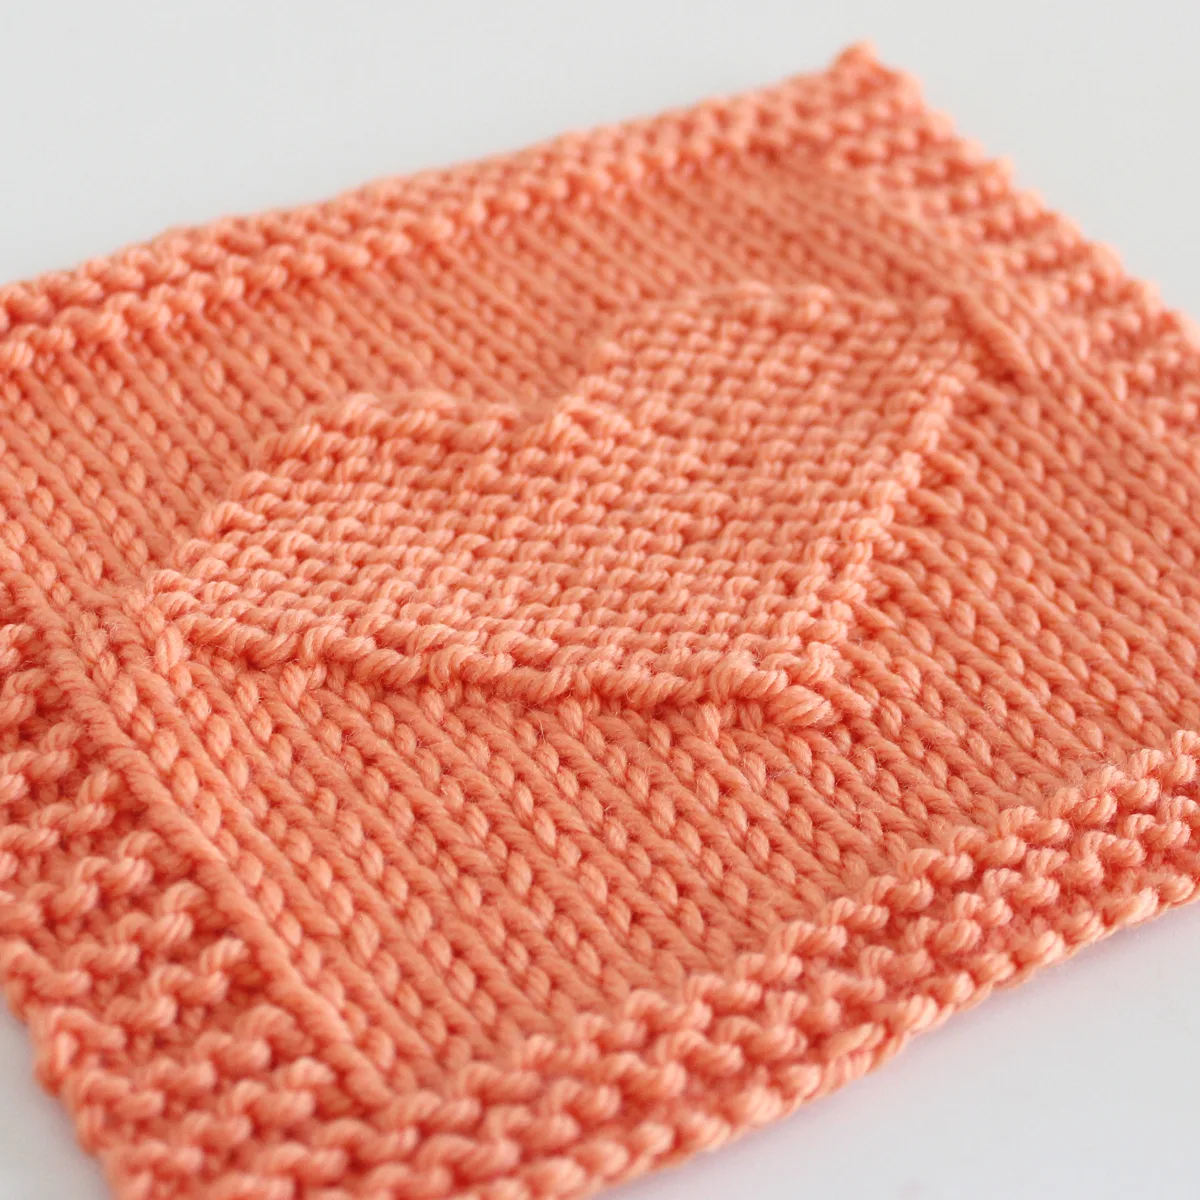 Heart Square Stitch Knitting Pattern in orange colored yarn.